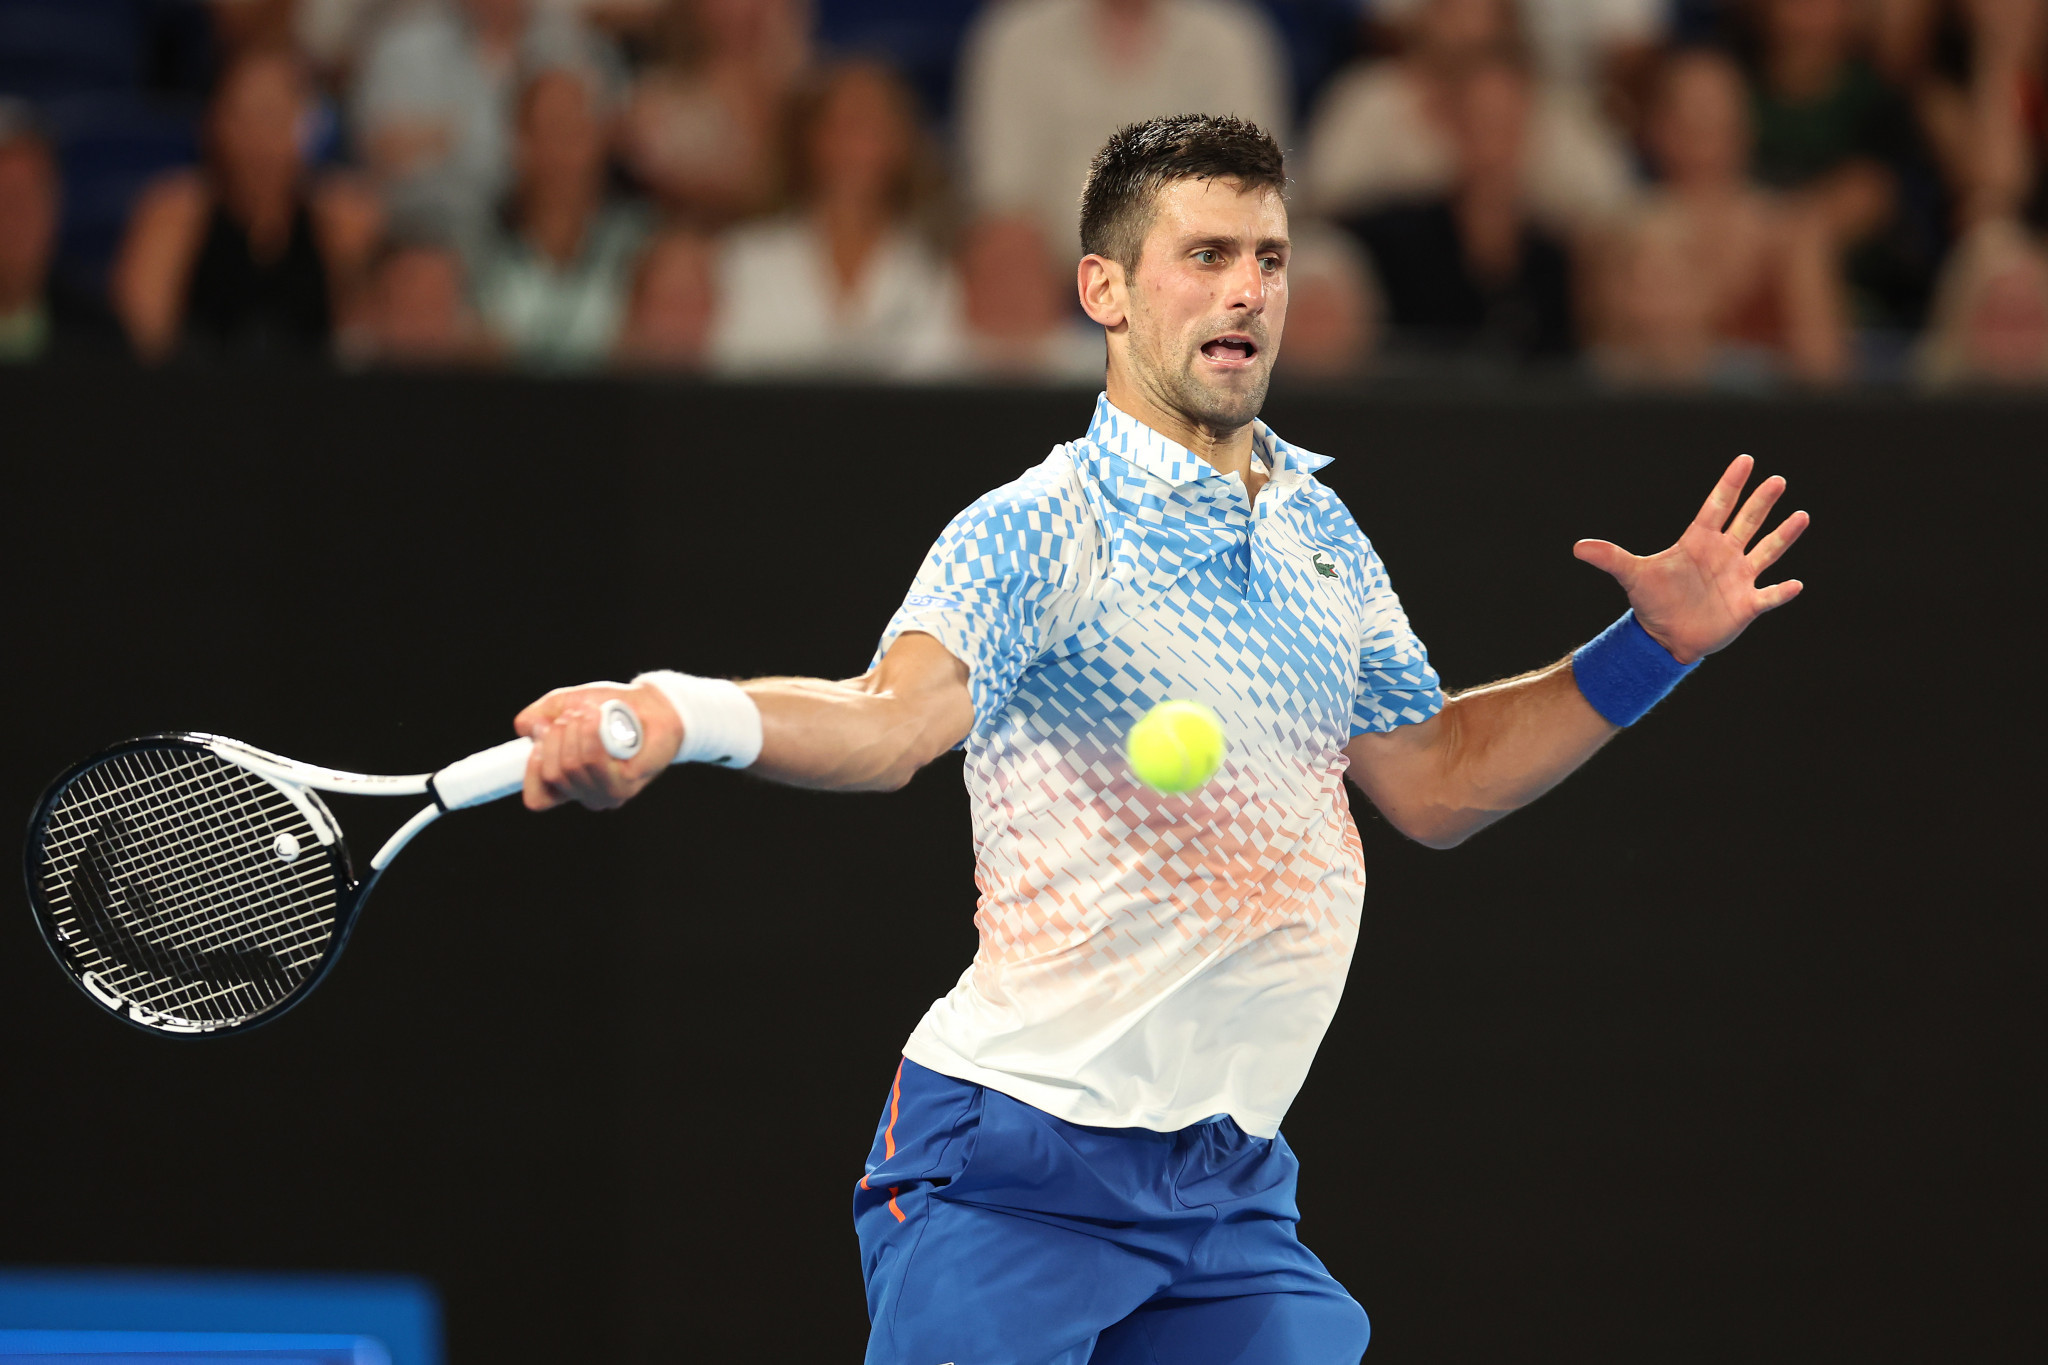 Djokovic continues to impress as he reaches tenth Australian Open men's final